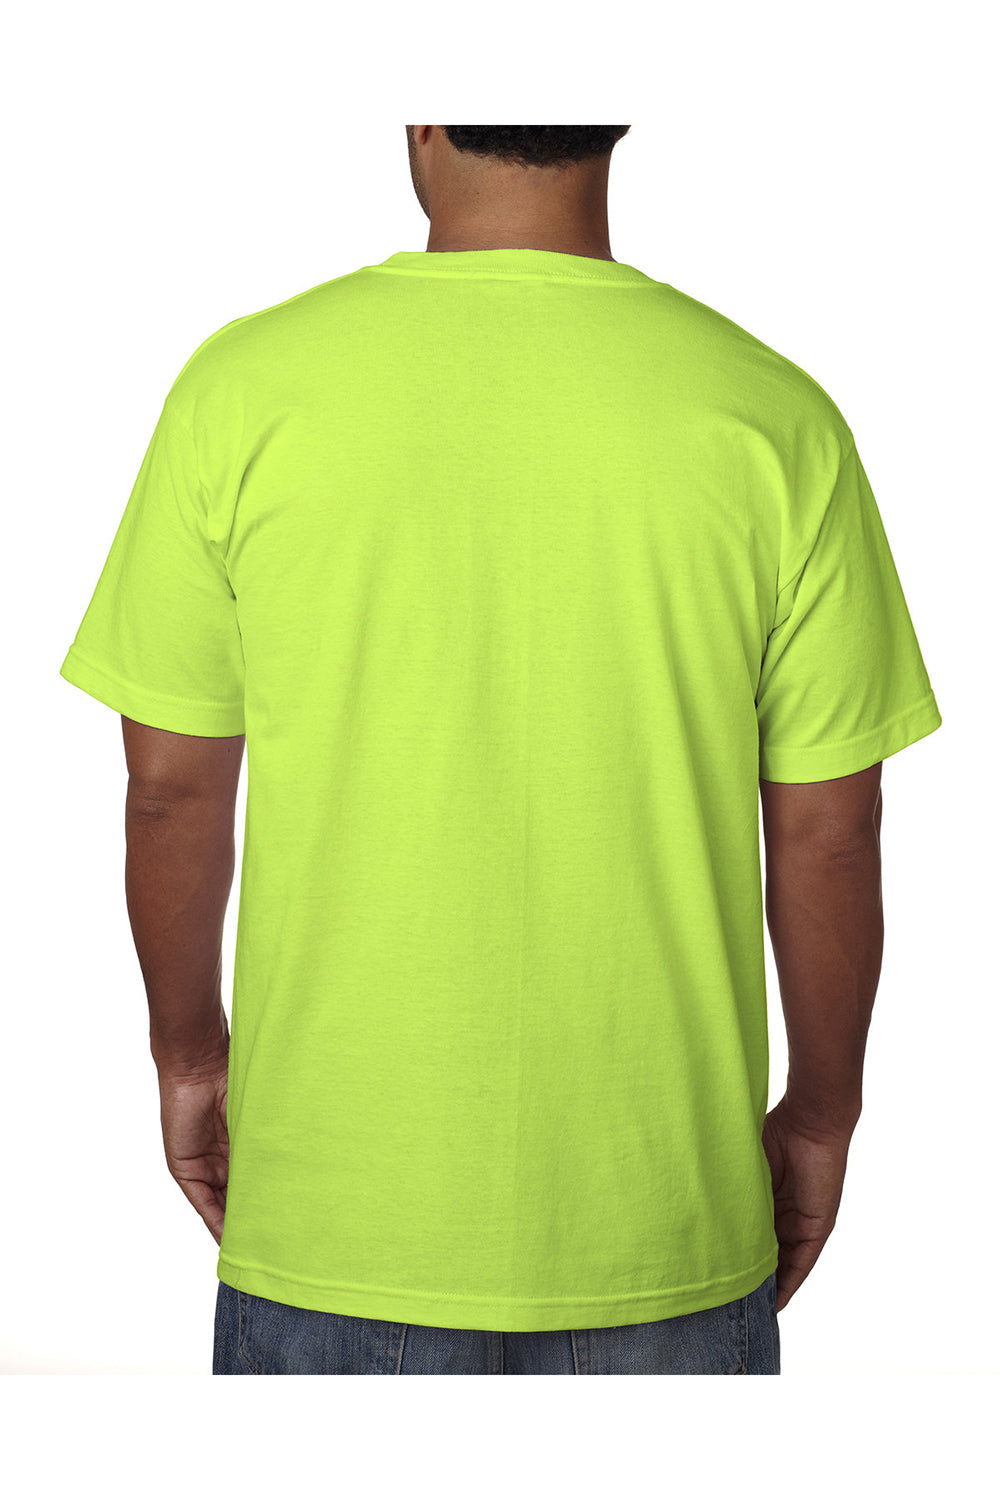 Bayside BA5070 Mens USA Made Short Sleeve Crewneck T-Shirt w/ Pocket Lime Green Model Back